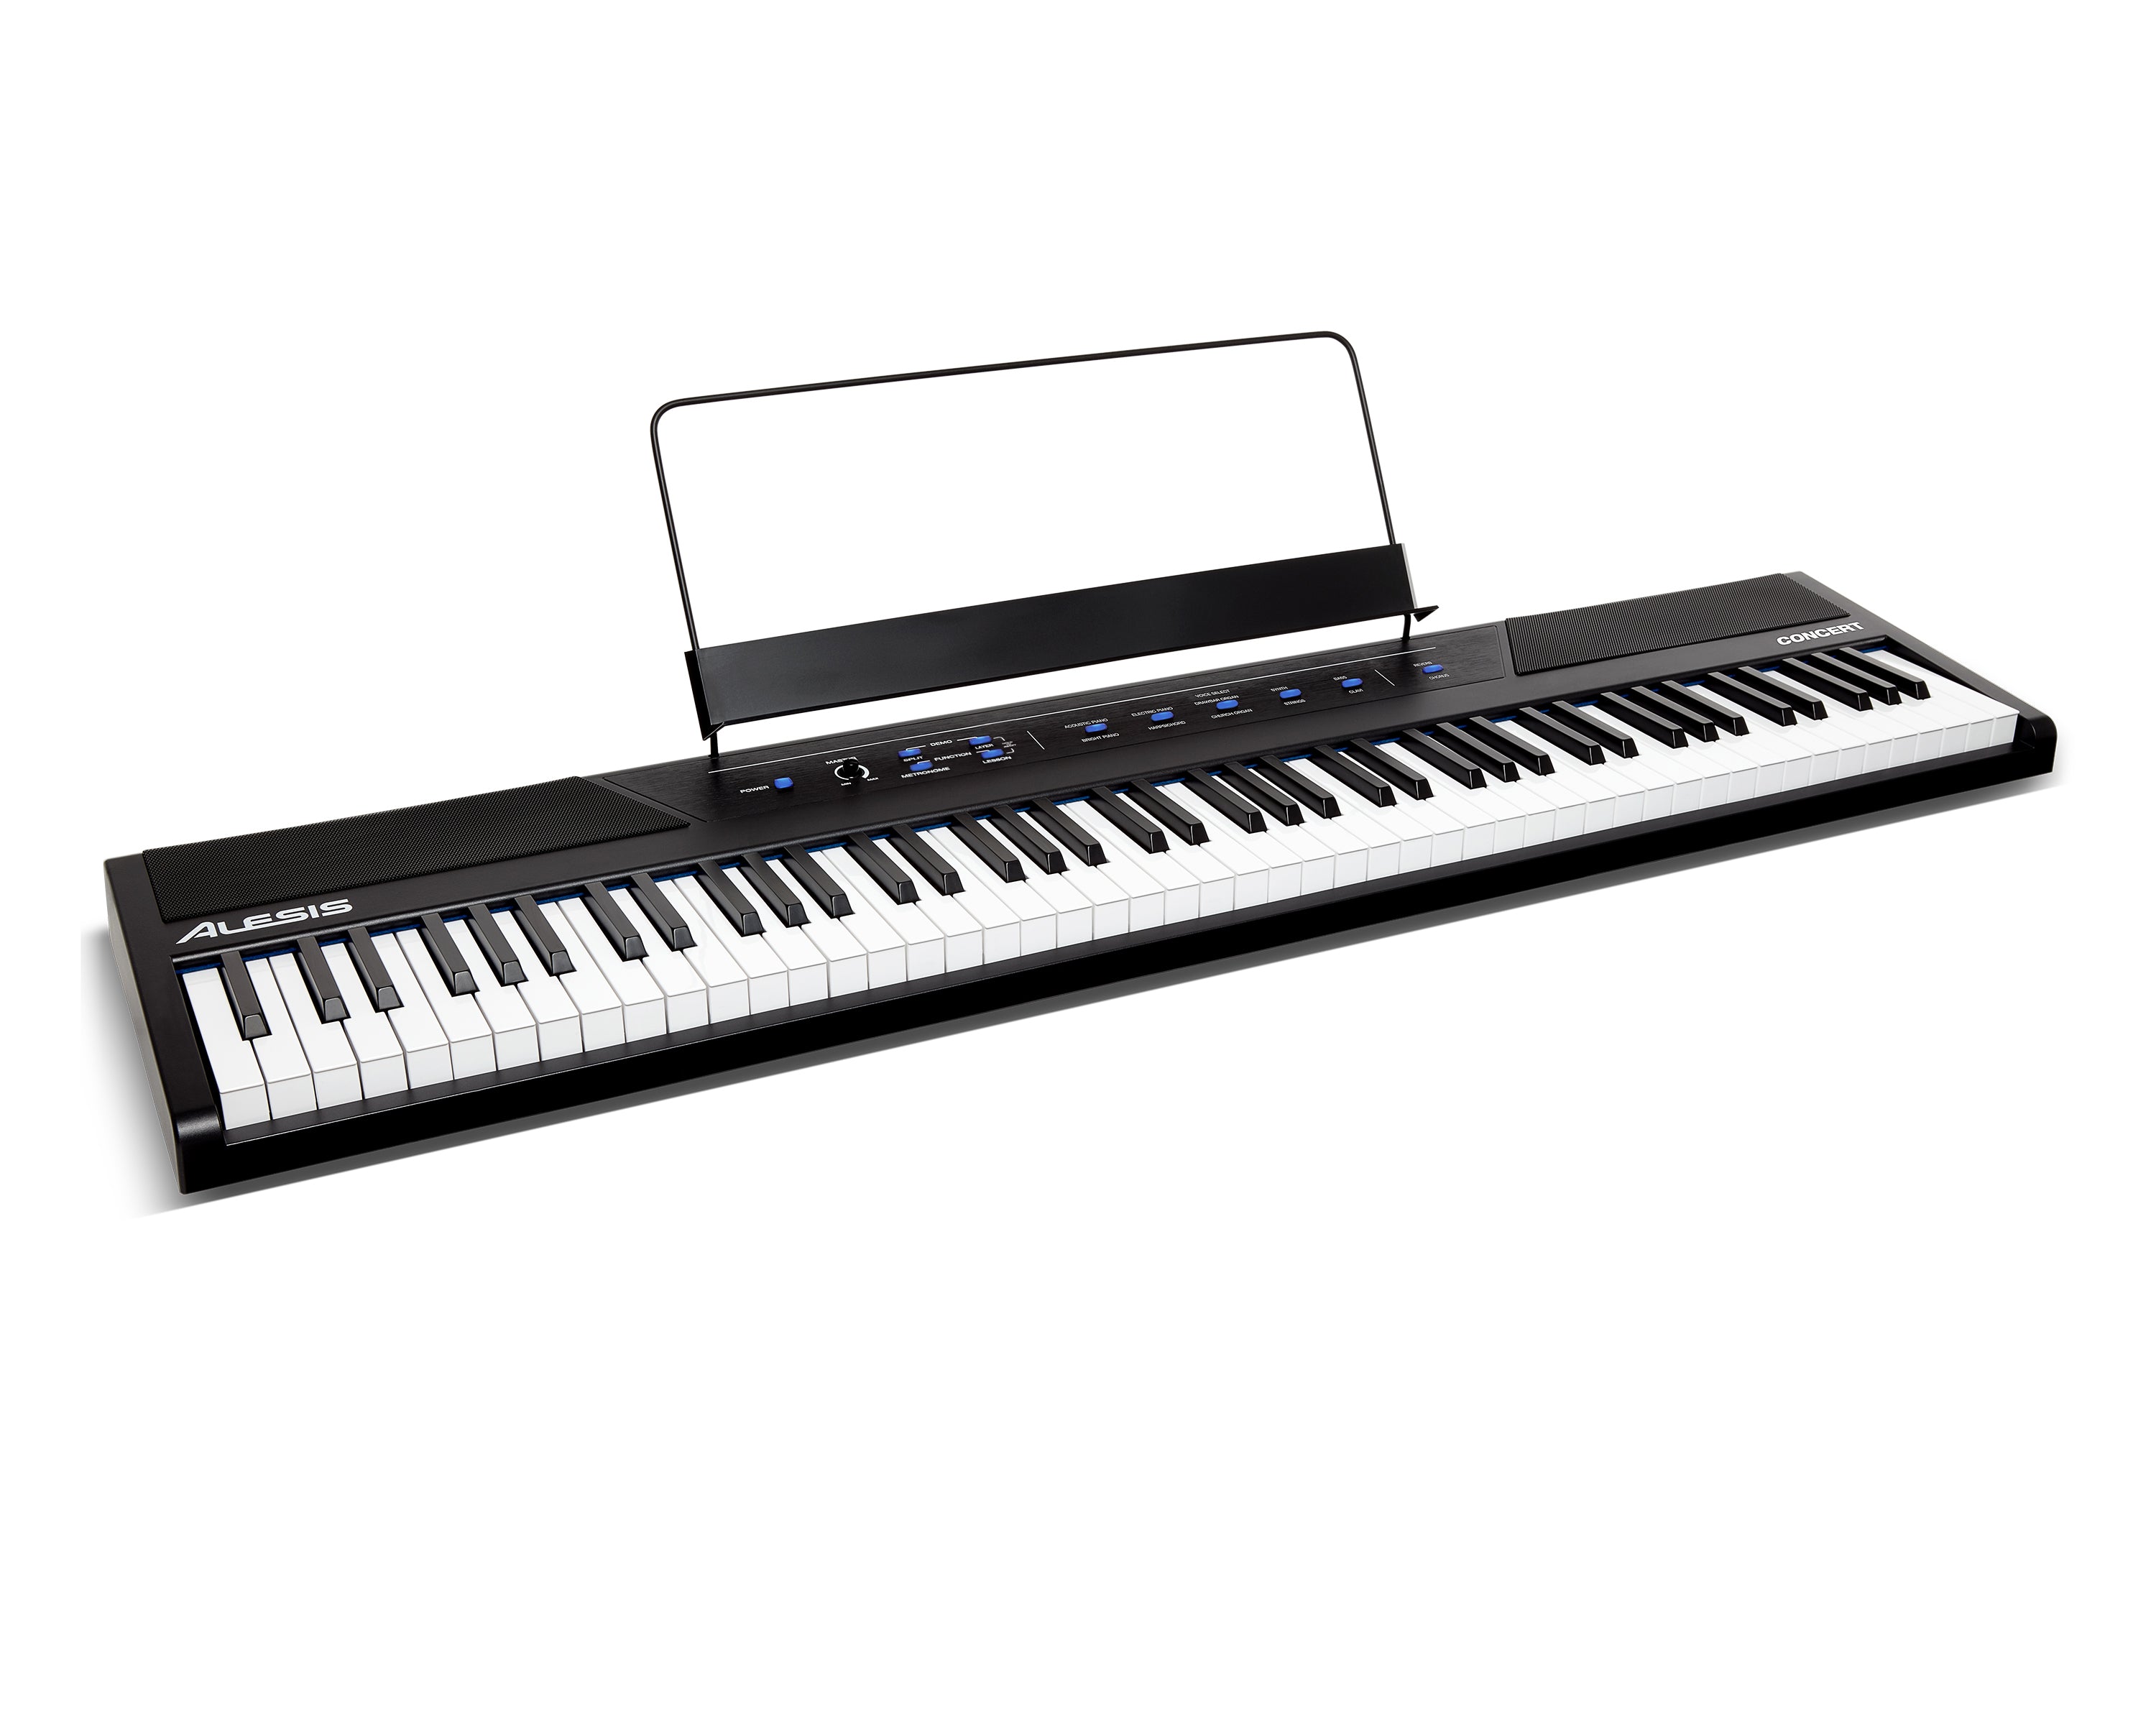 Alesis CONCERT - 88-Key Digital Piano W/Full-Sized Keys